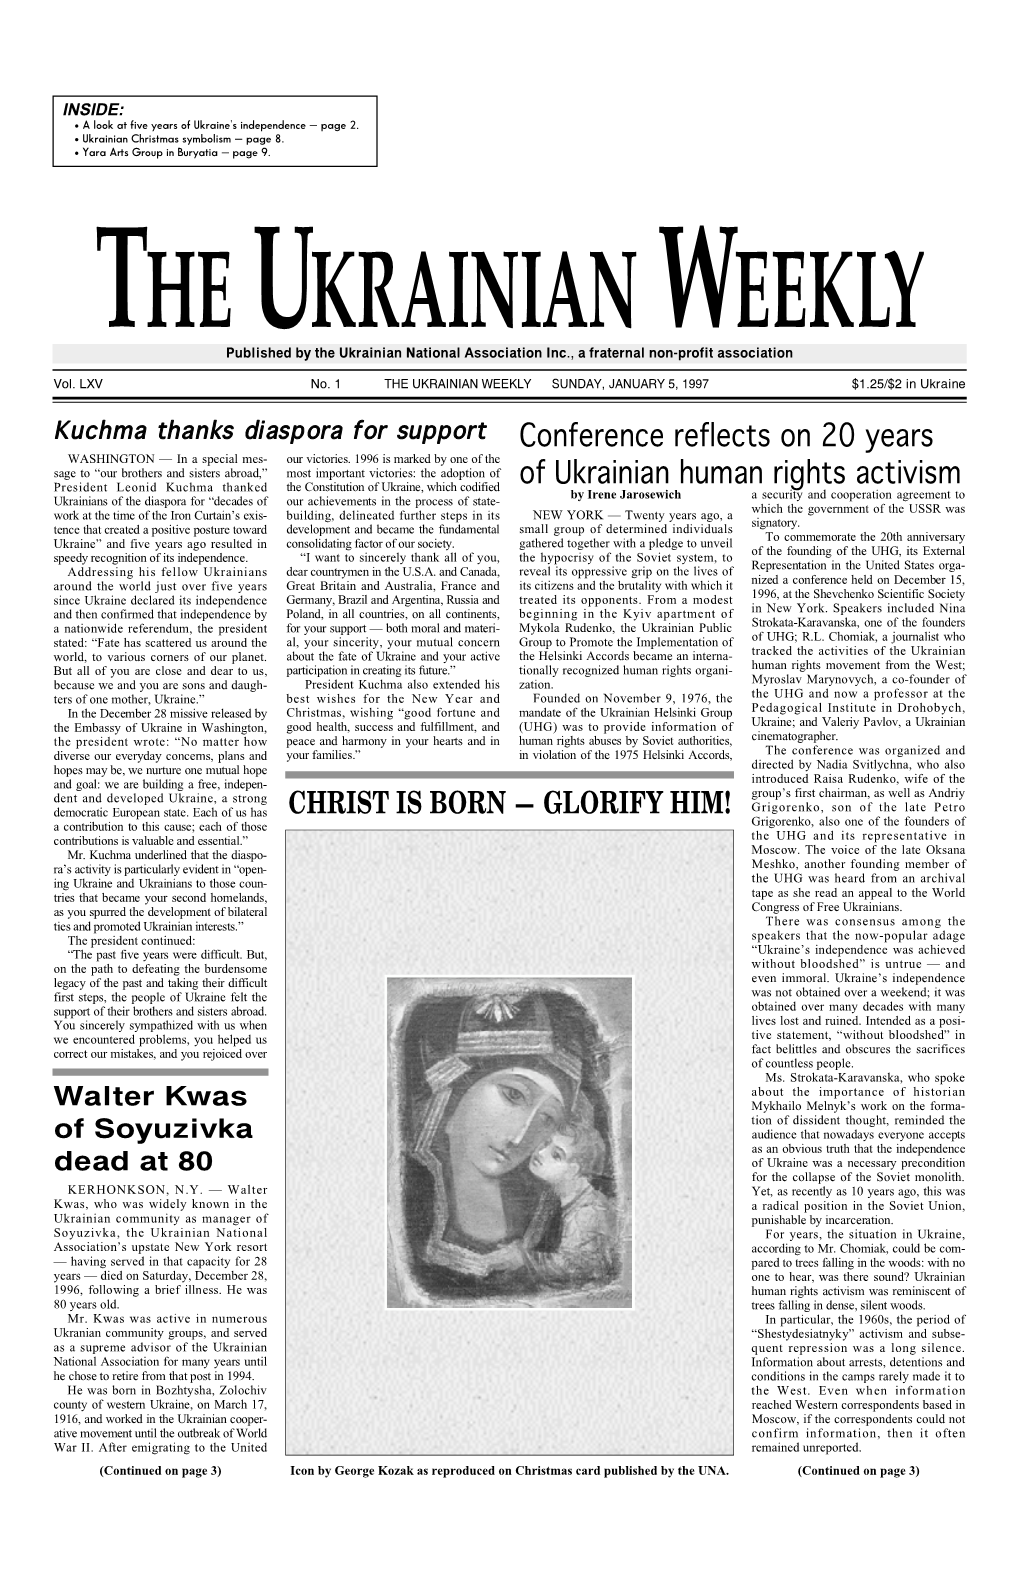 The Ukrainian Weekly 1997, No.1